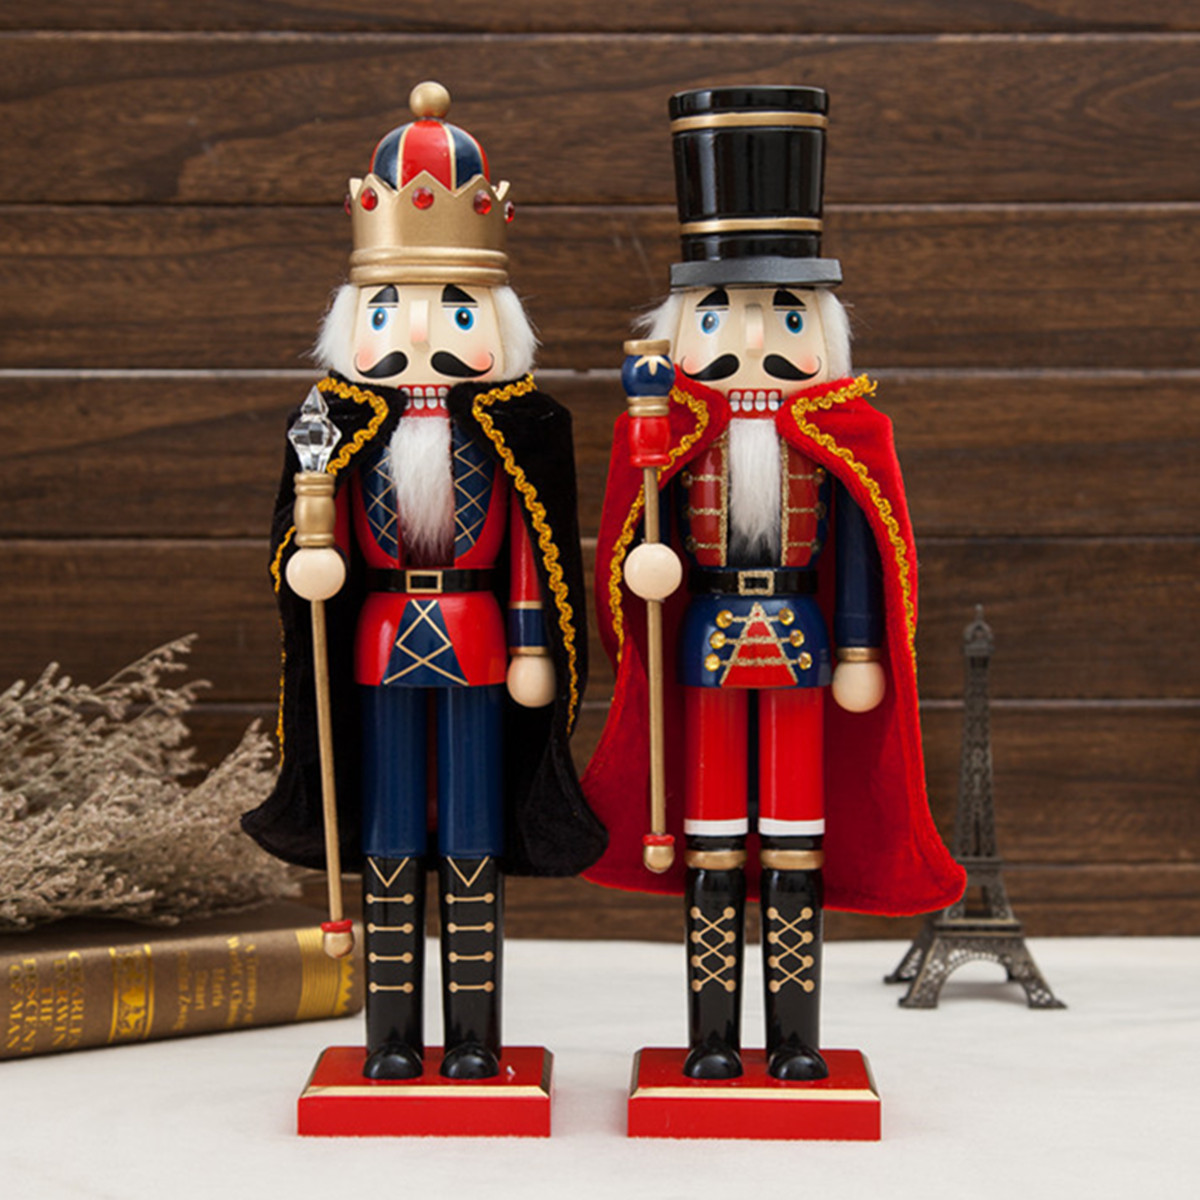 38cm-Wooden-Nutcracker-Doll-Soldier-Vintage-Handcraft-Decoration-Christmas-Gifts-1394894-4